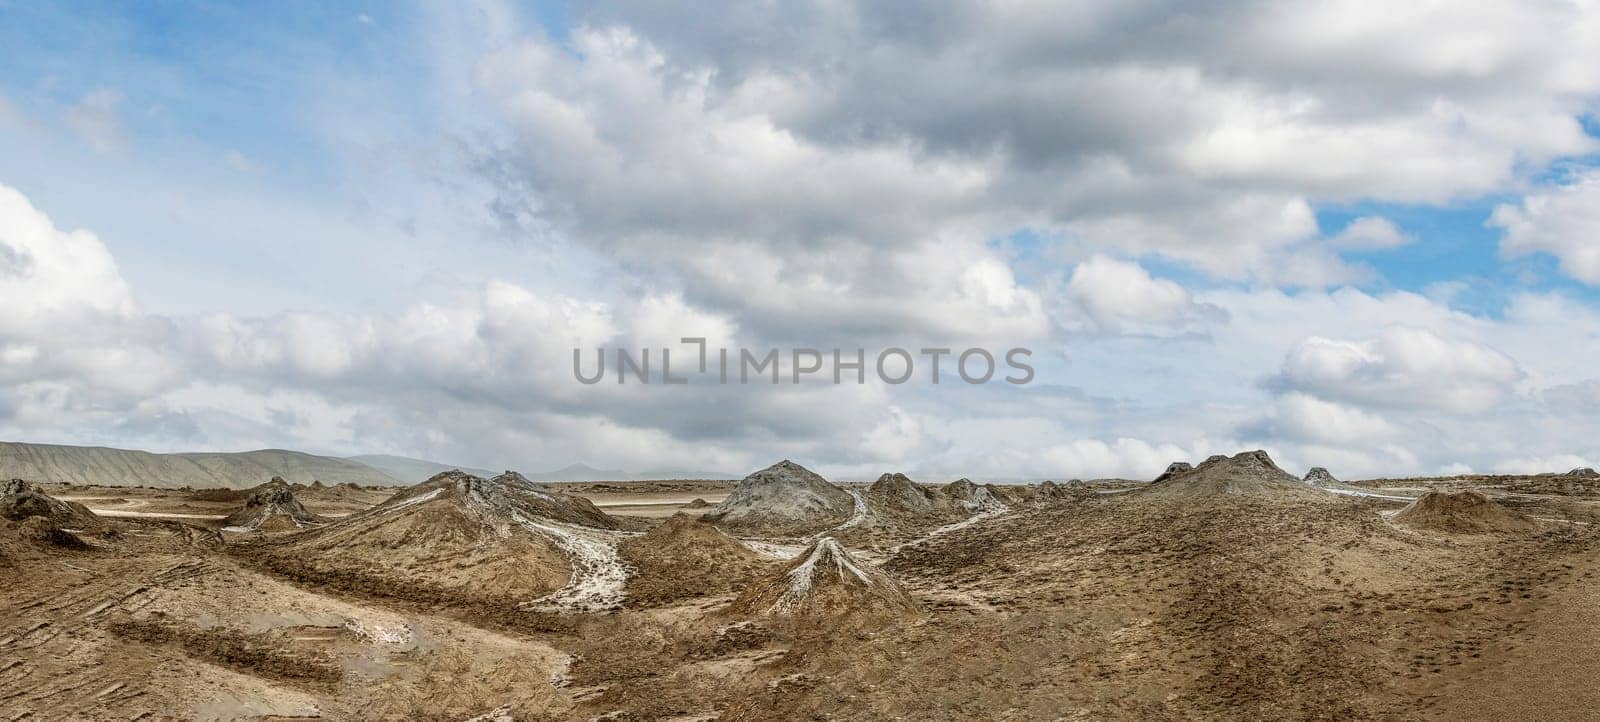 Panoramic view of mud volcanoes, Gobustan by tan4ikk1